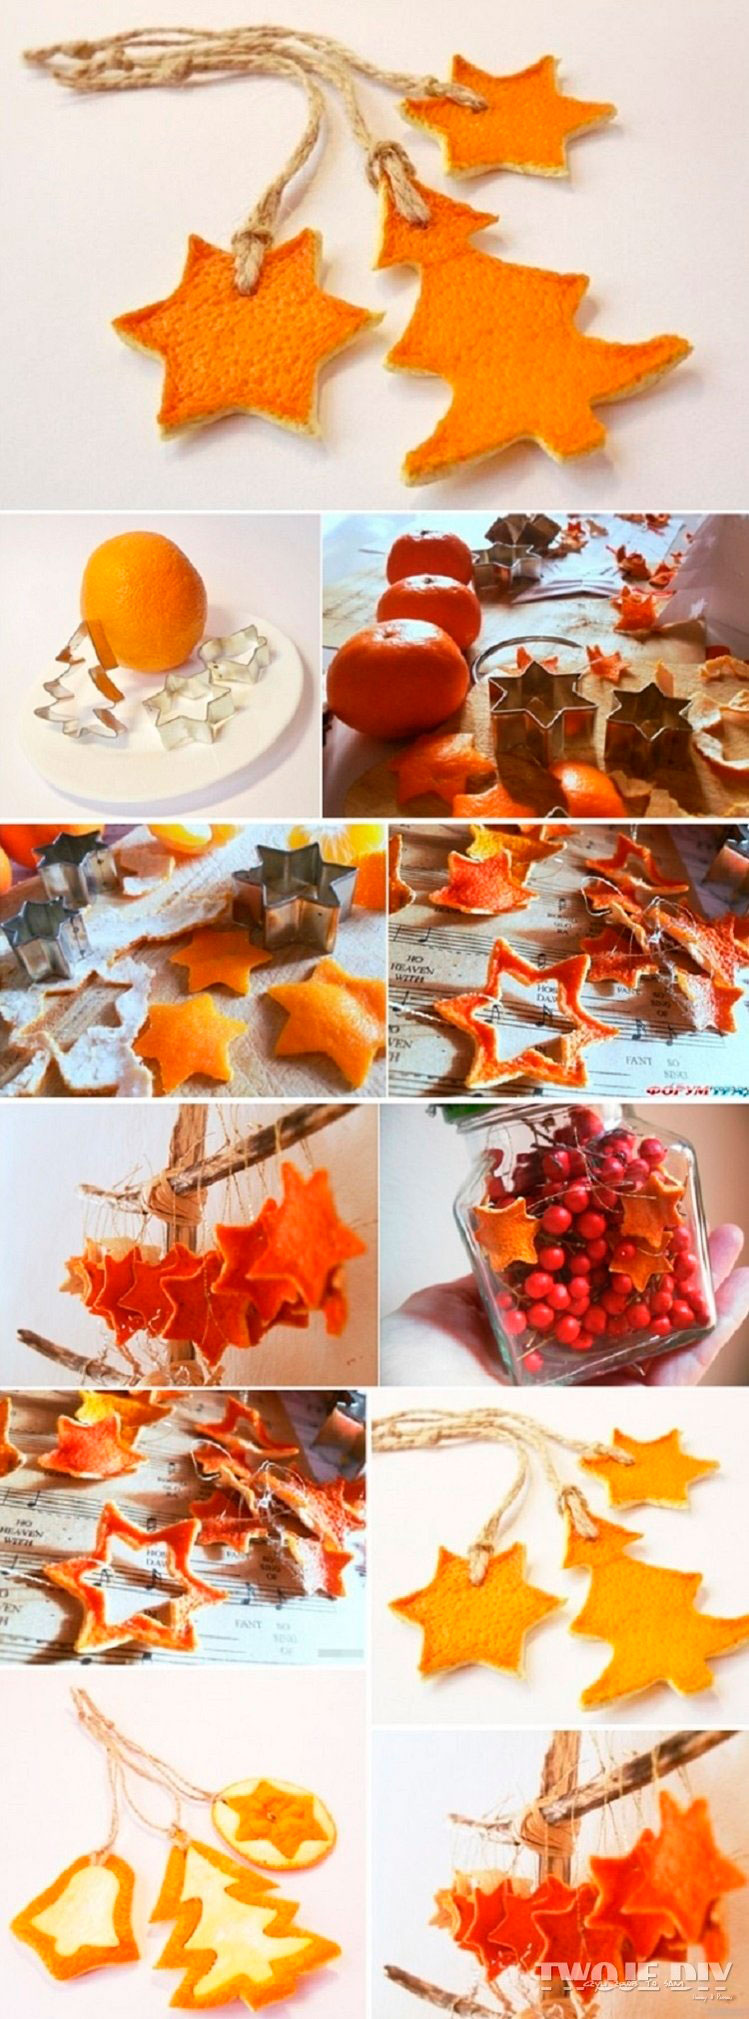 recycle orange peels to make hanging ornaments